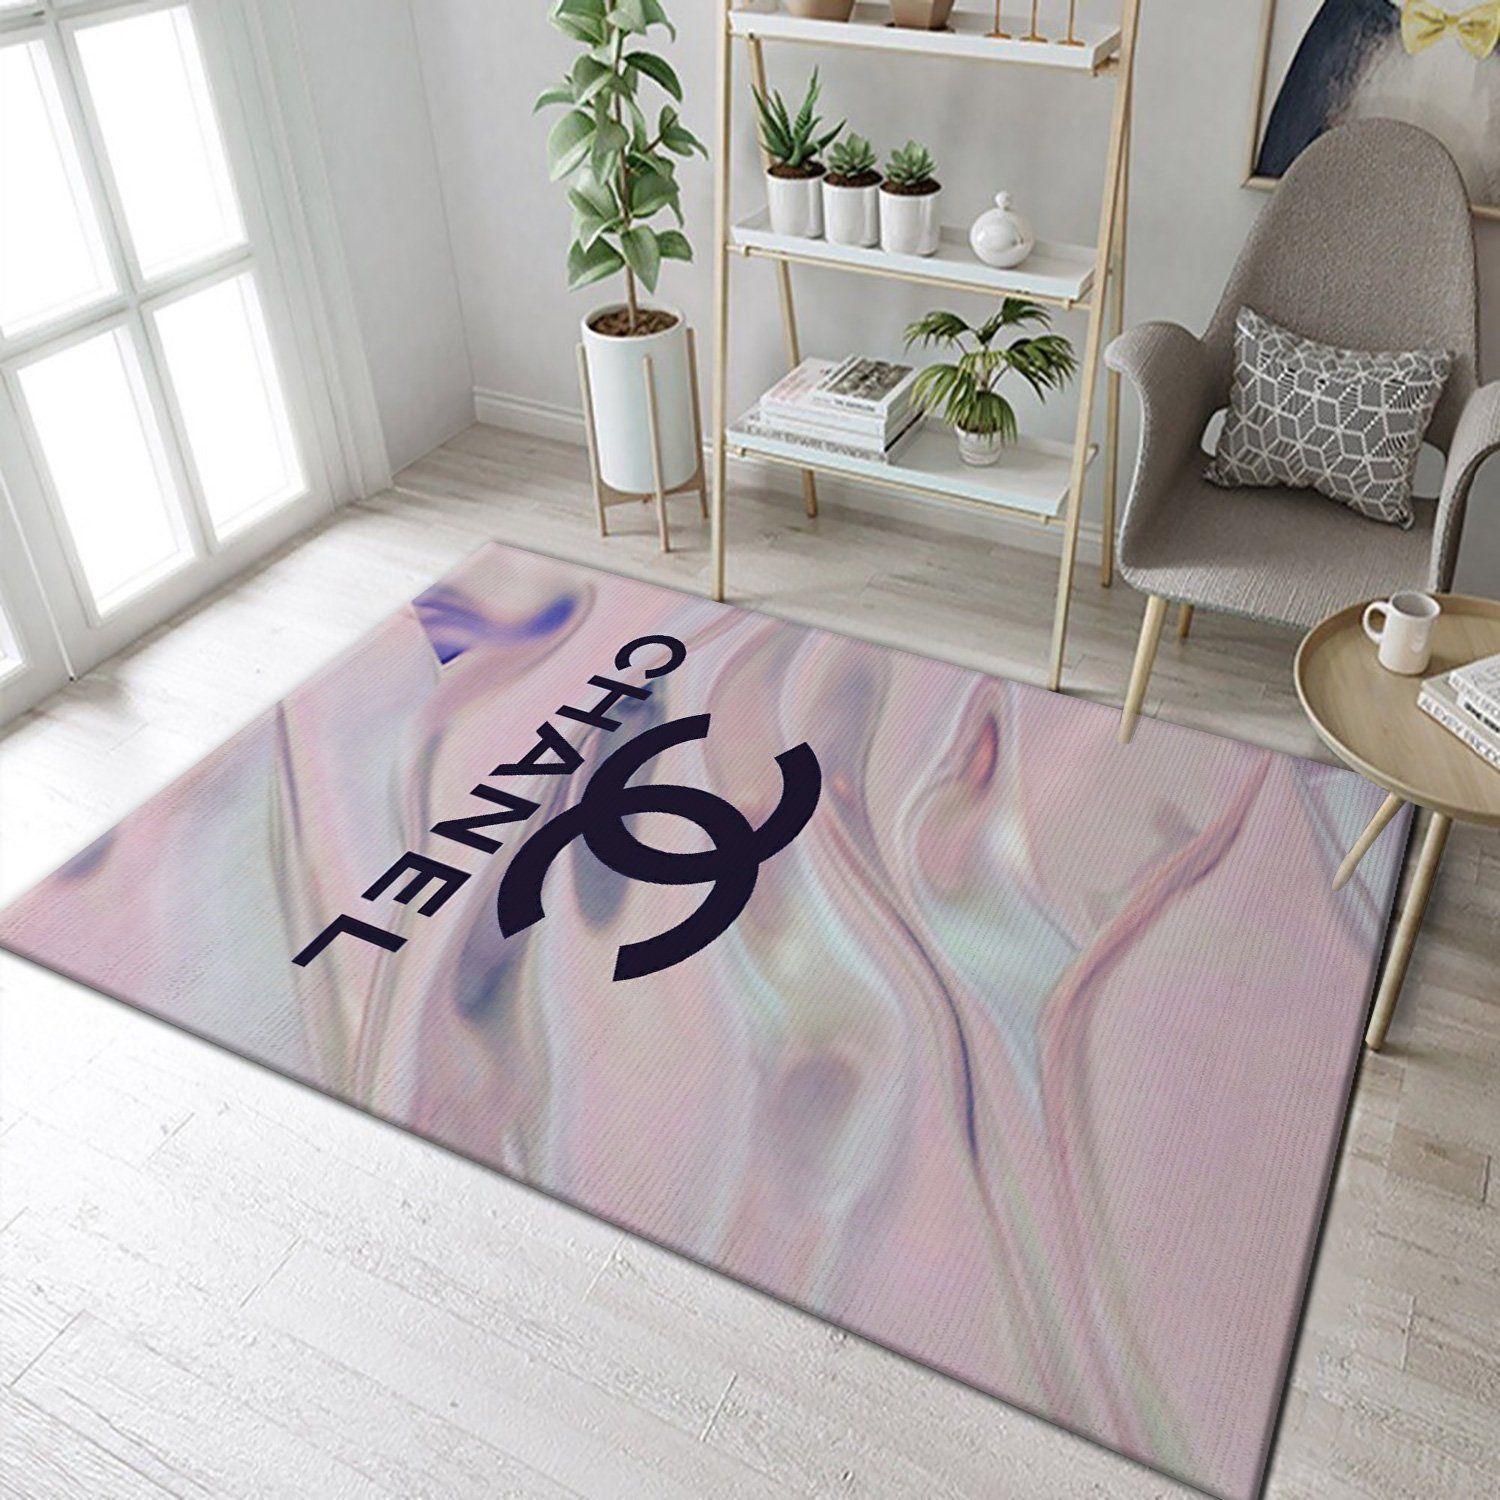 Chanel Area Floor home decoration carpet rug luxury fashion brand